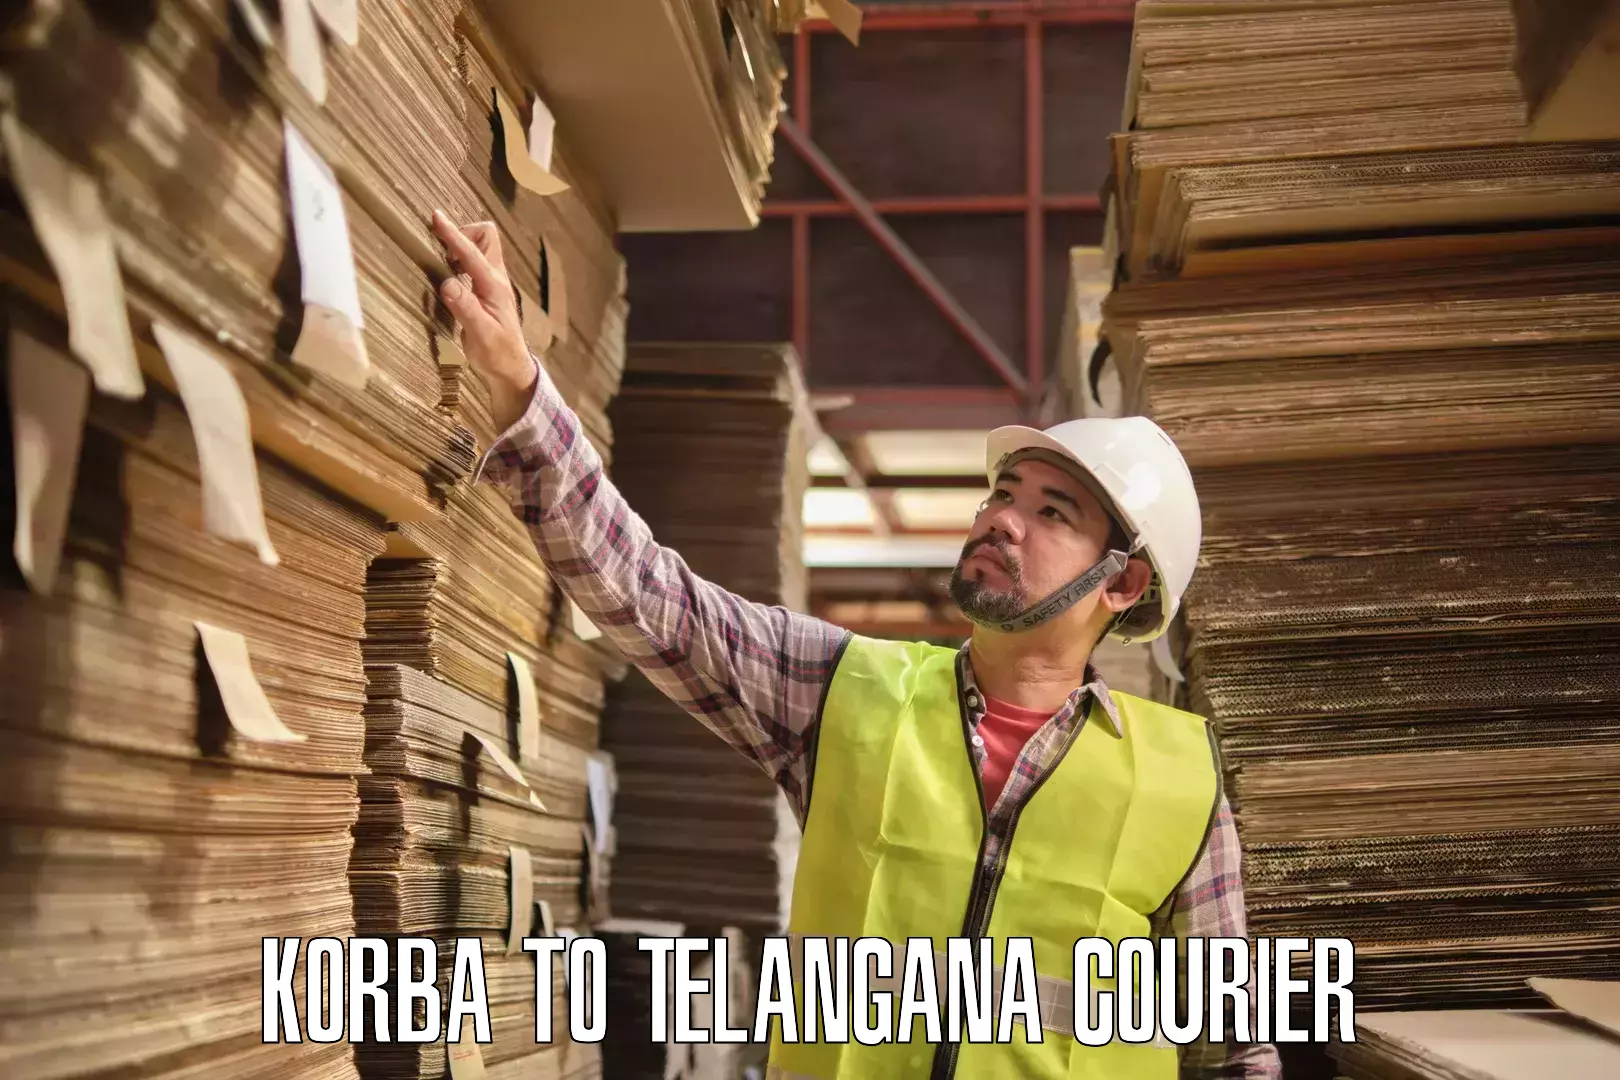 Professional courier handling Korba to Medak